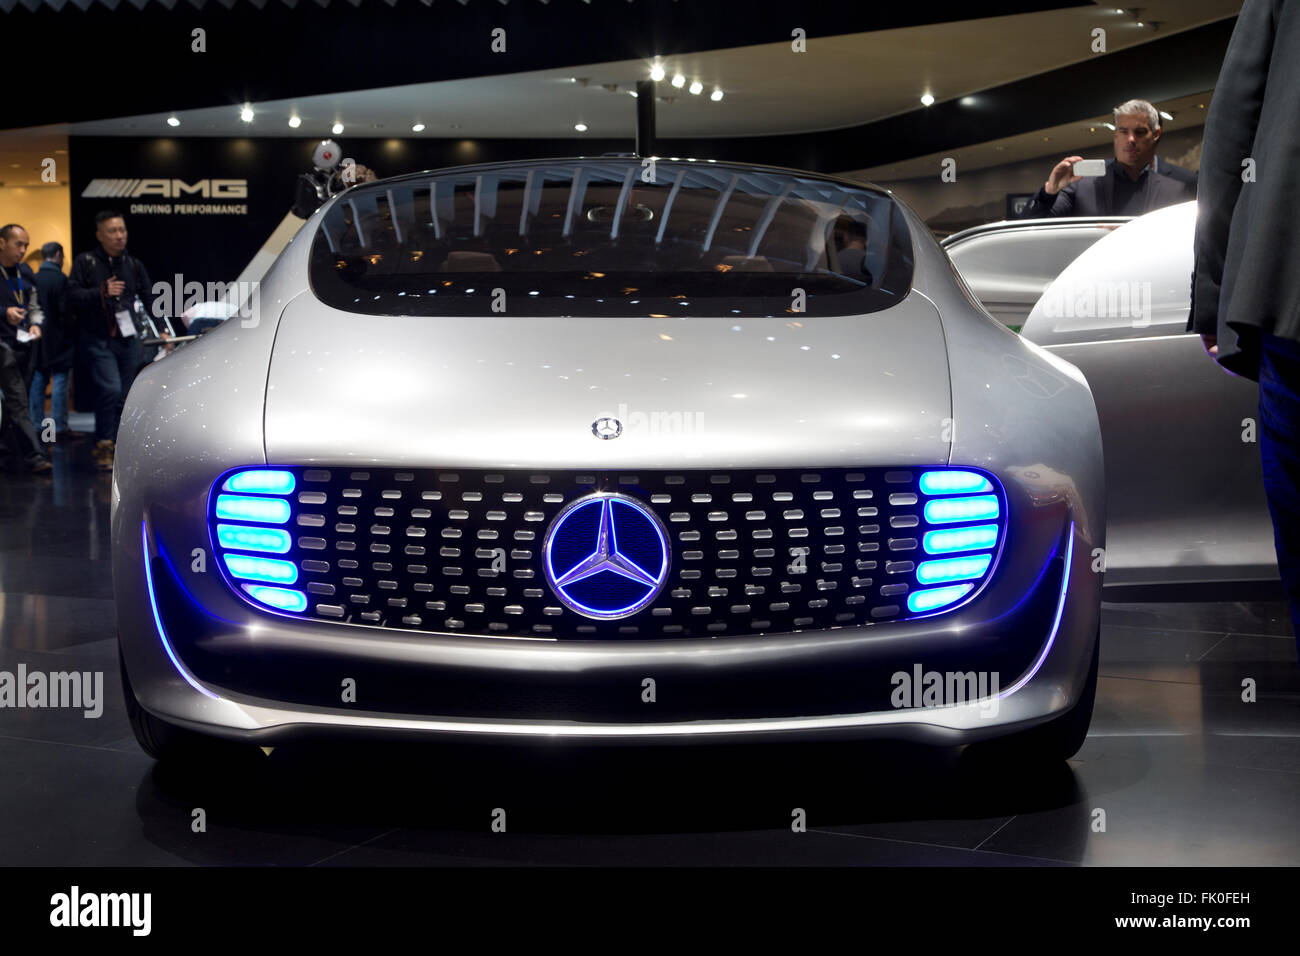 Mercedes-Benz F015 Autonomous Car Concept at the Geneva Motor Show 2016 Stock Photo